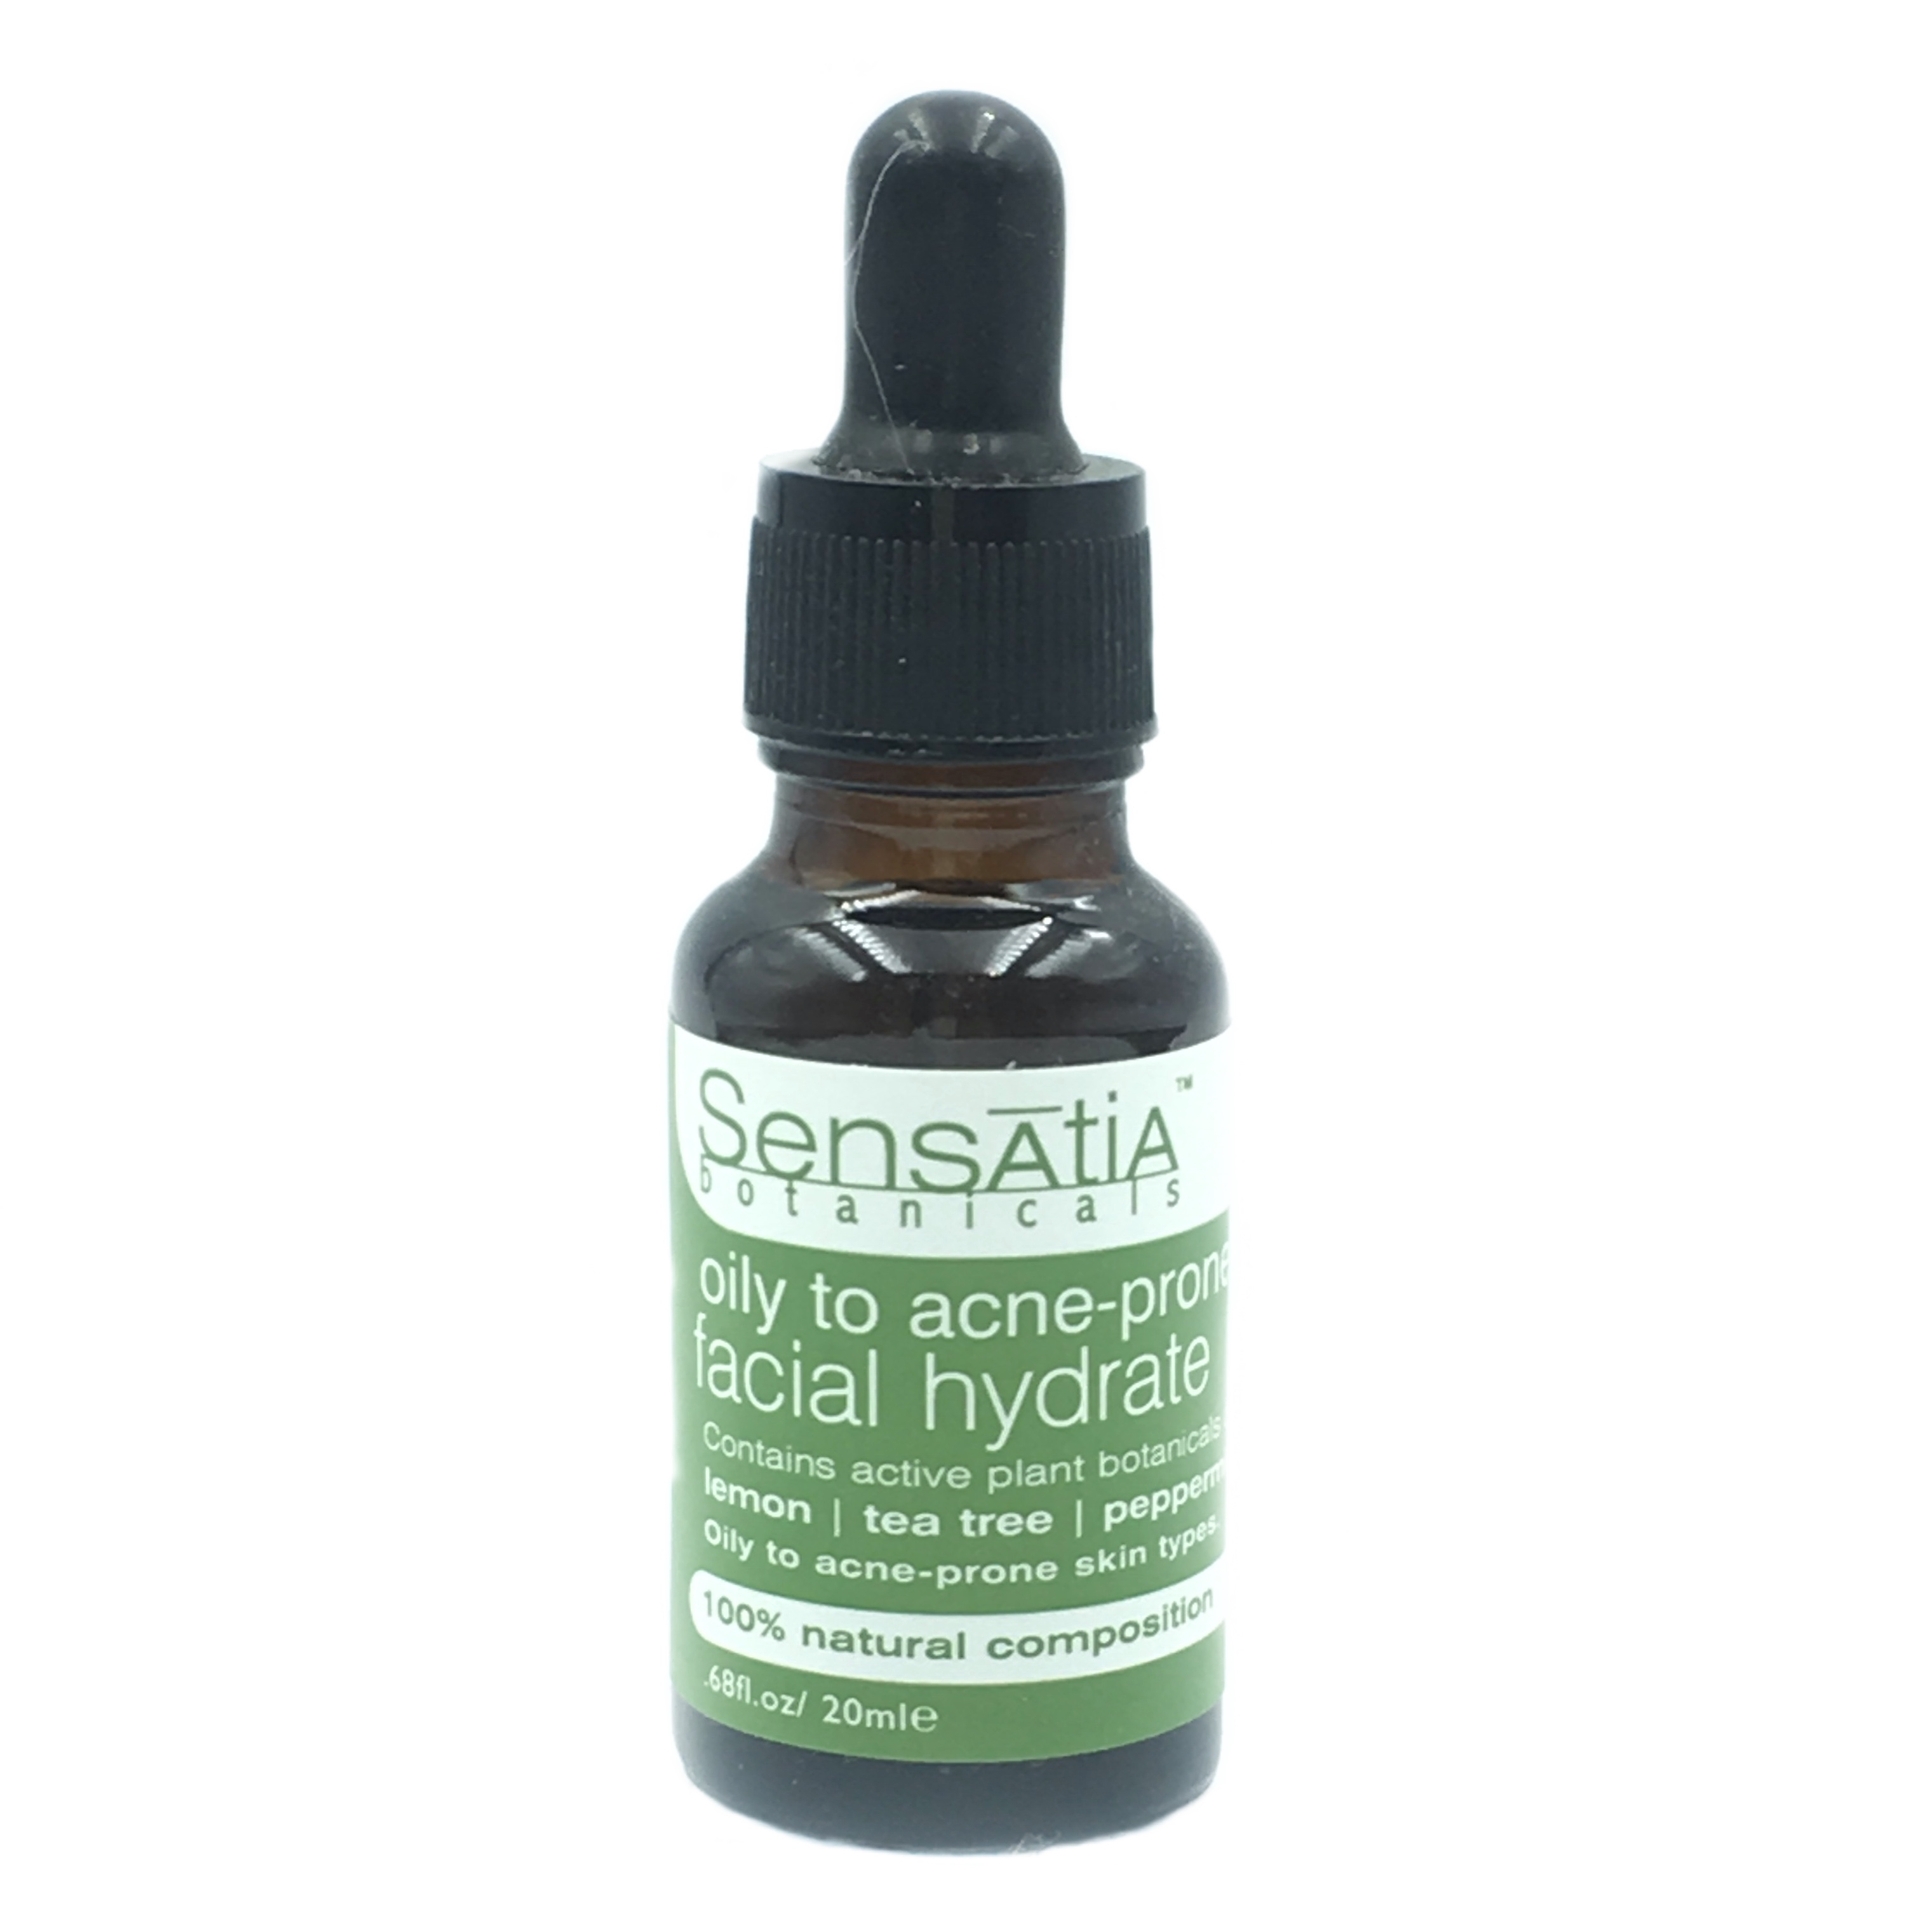 Sensatia Botanicals Oil To Acne-Prone Facial Hydrate